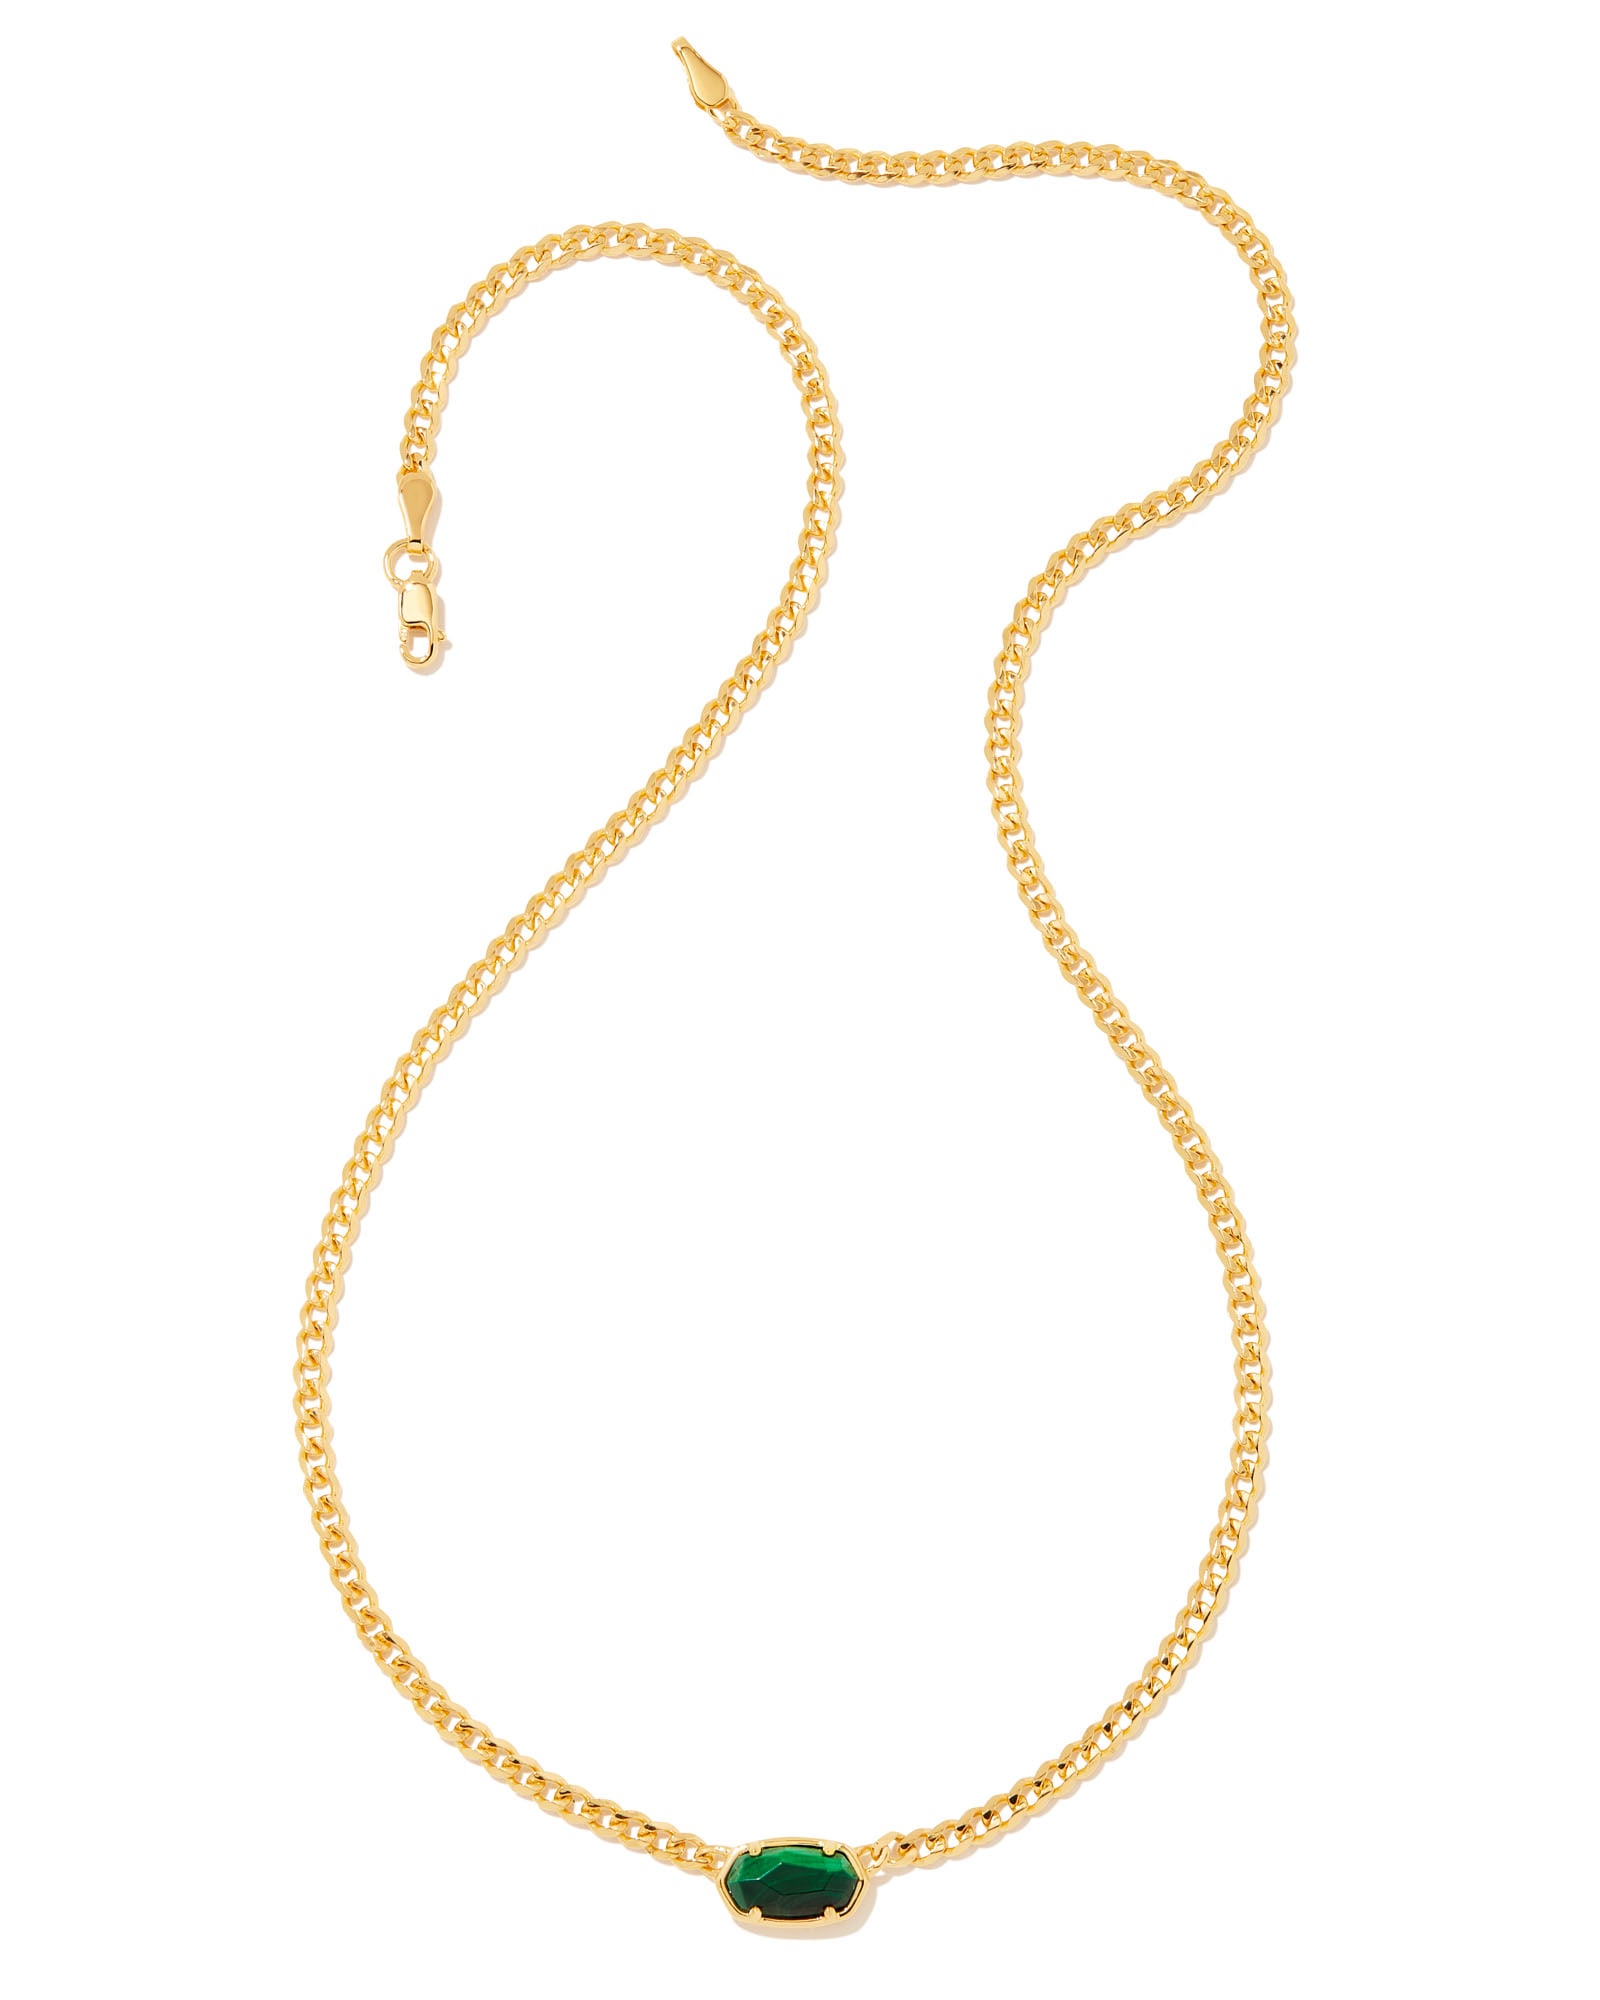 Fern 18k Gold Vermeil Curb Chain Necklace in Malachite